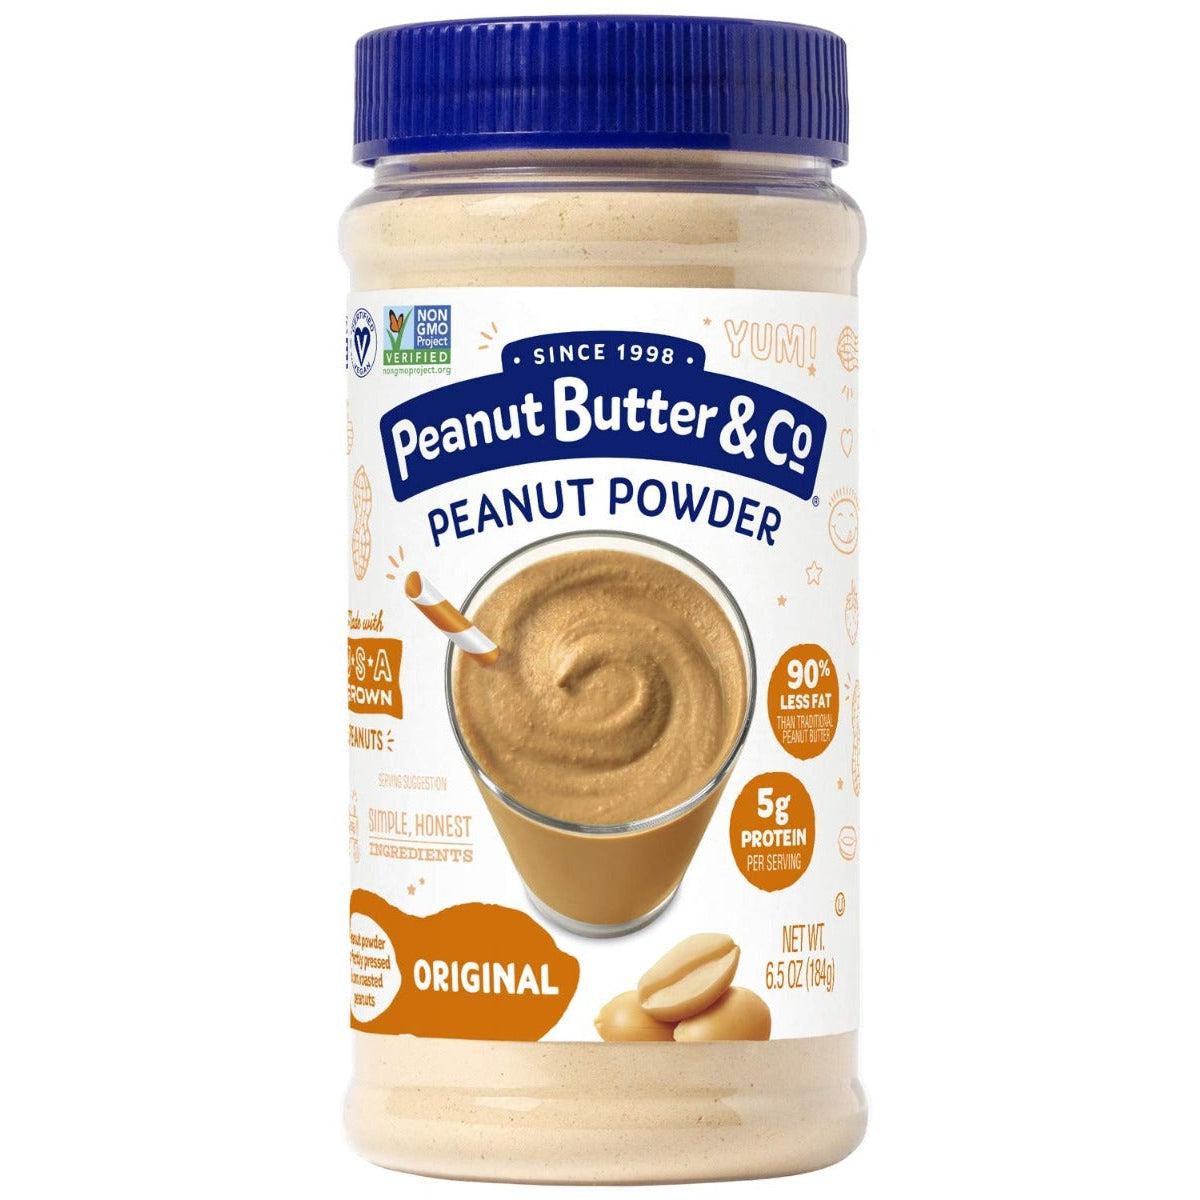 Peanut Butter & Co. Original Peanut Powder Non-GMO Gluten Free Vegan 184g